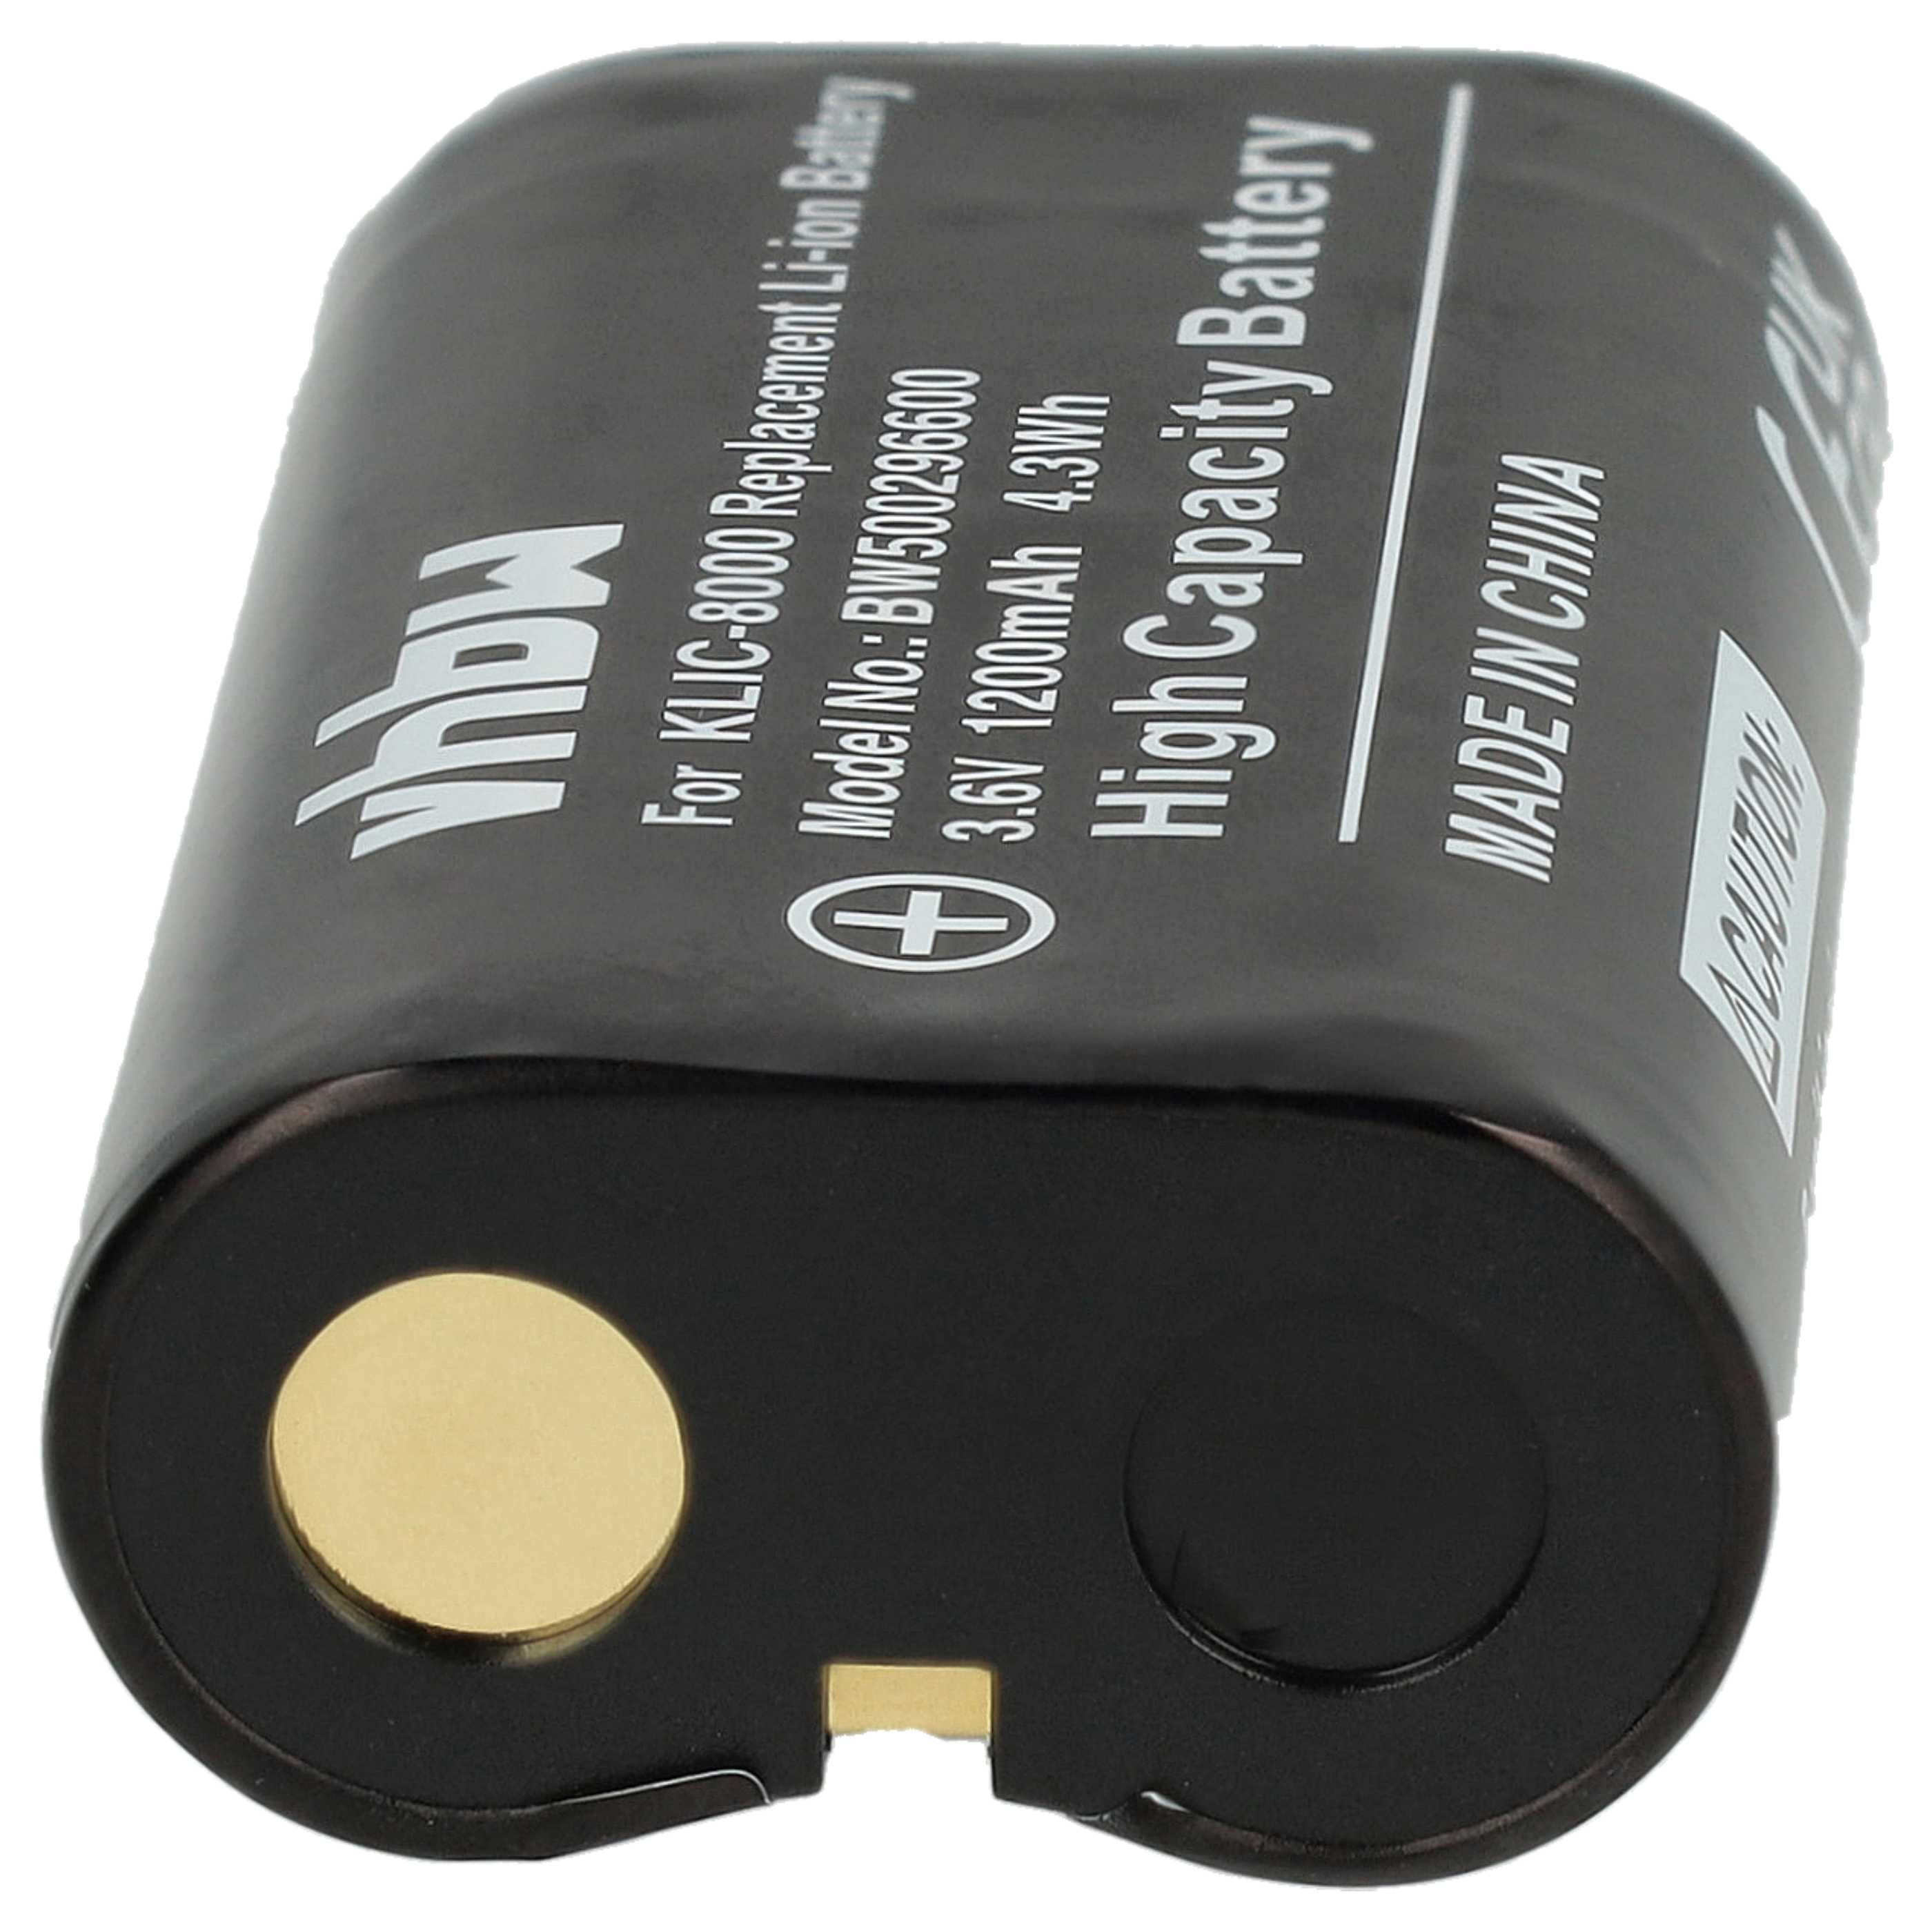 Battery Replacement for Kodak Klic-8000, RB50 - 1520mAh, 3.6V, Li-Ion